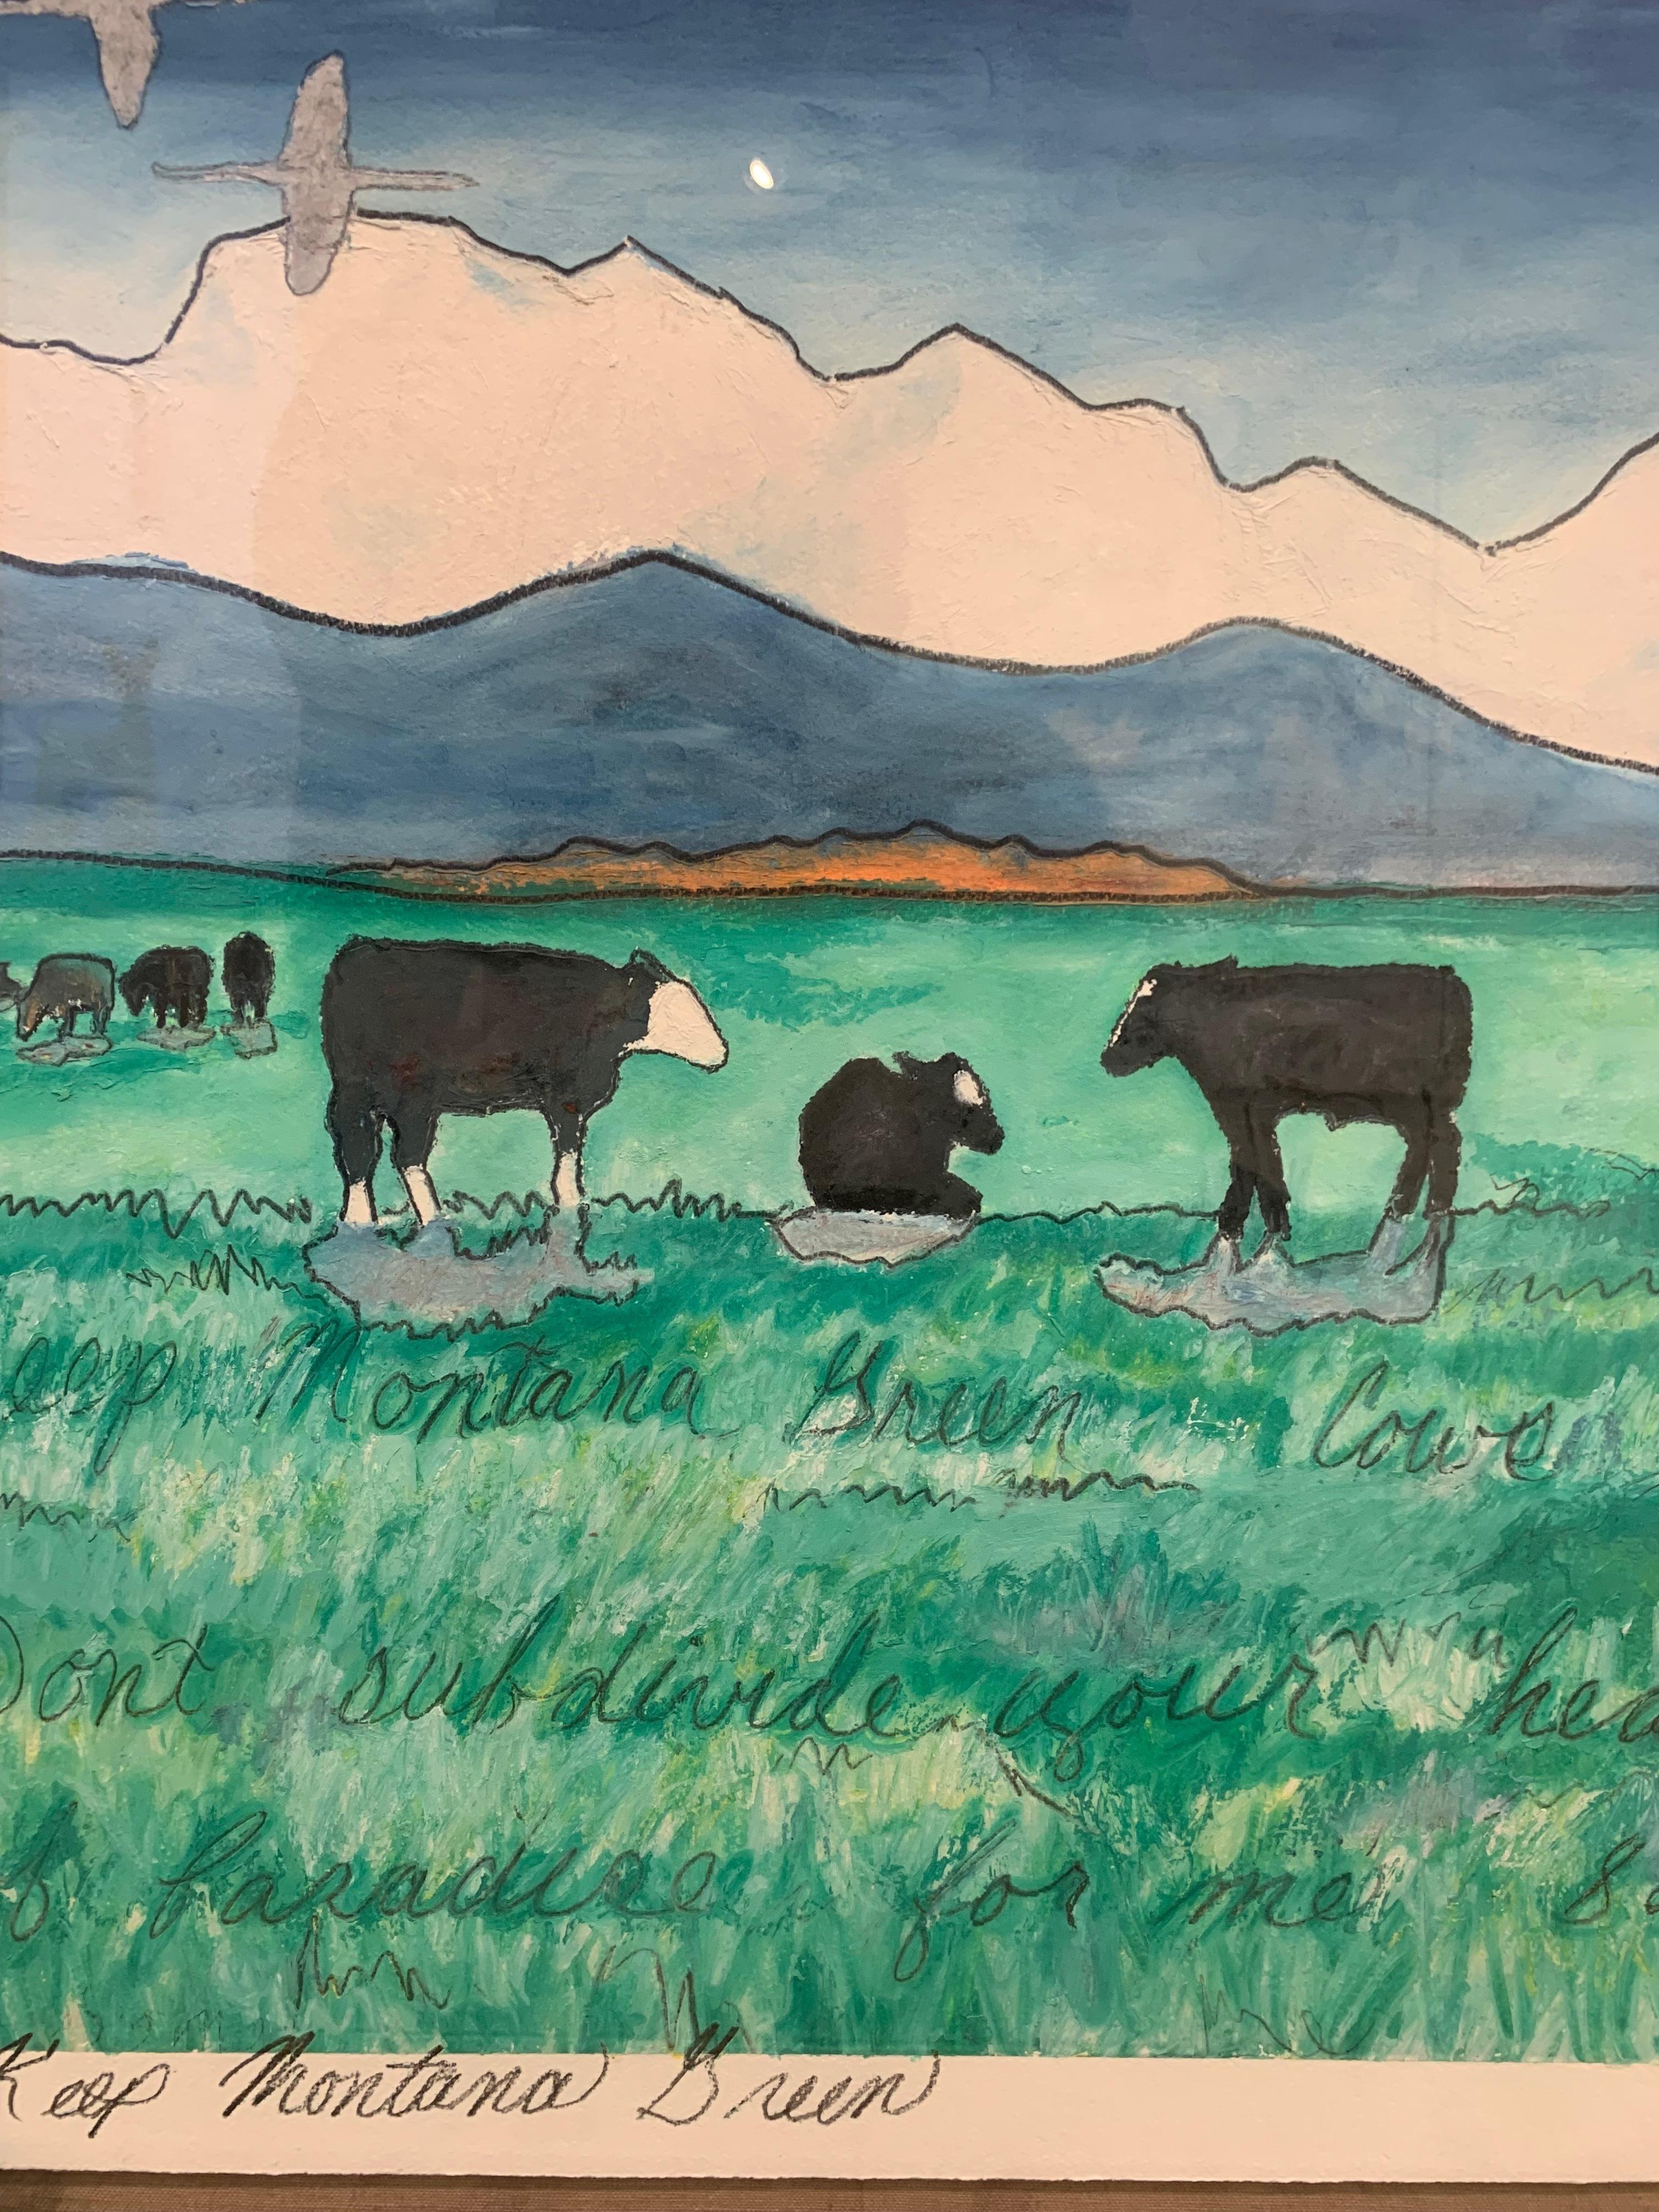 Keep Montana Green - Painting by Jennifer Lowe